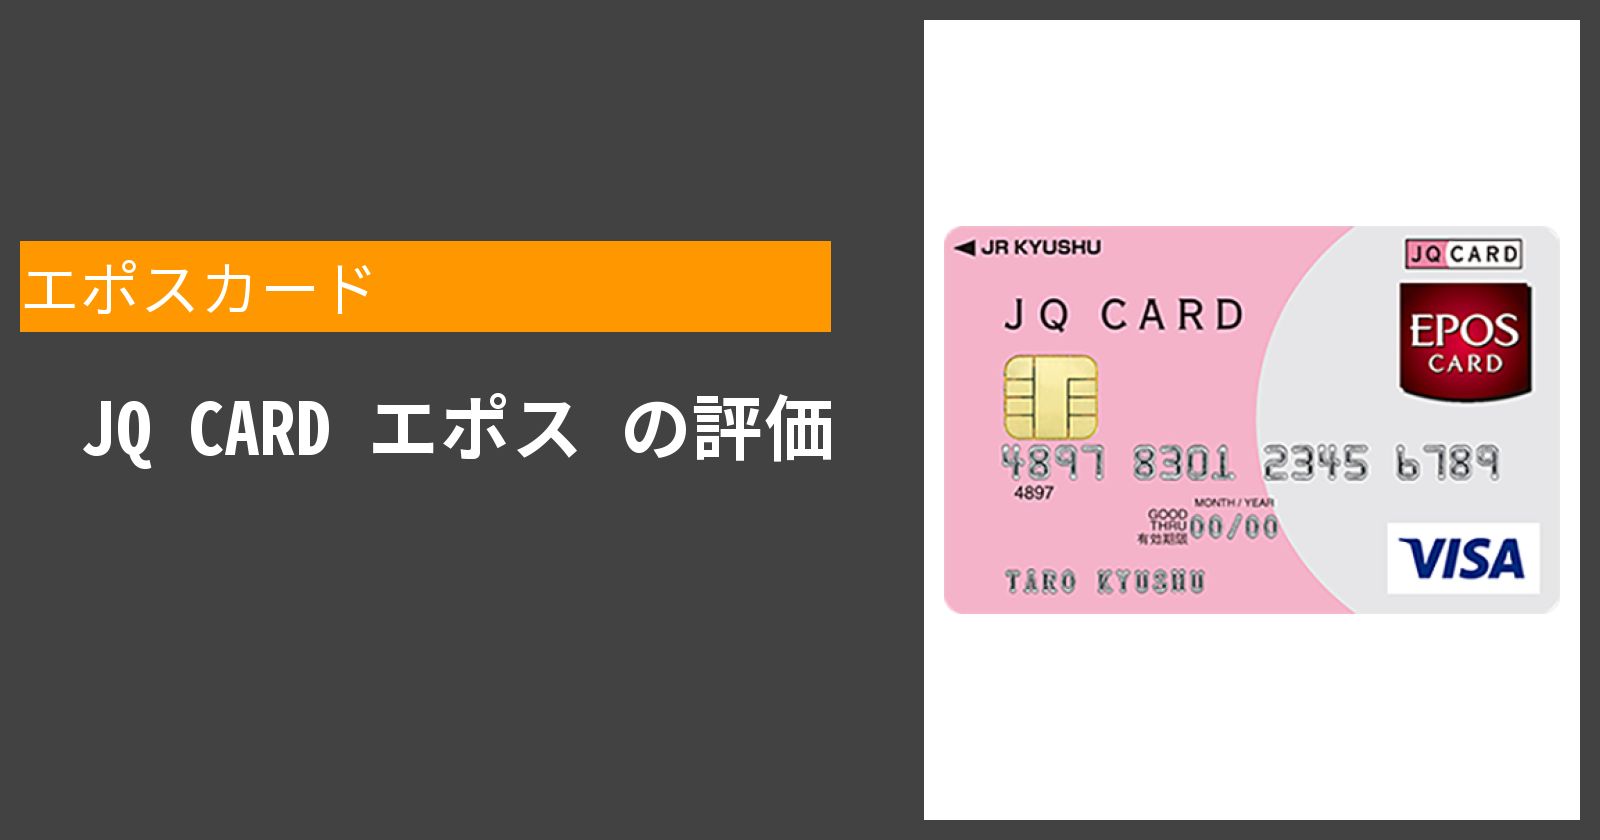  JQ CARD エポス を徹底評価